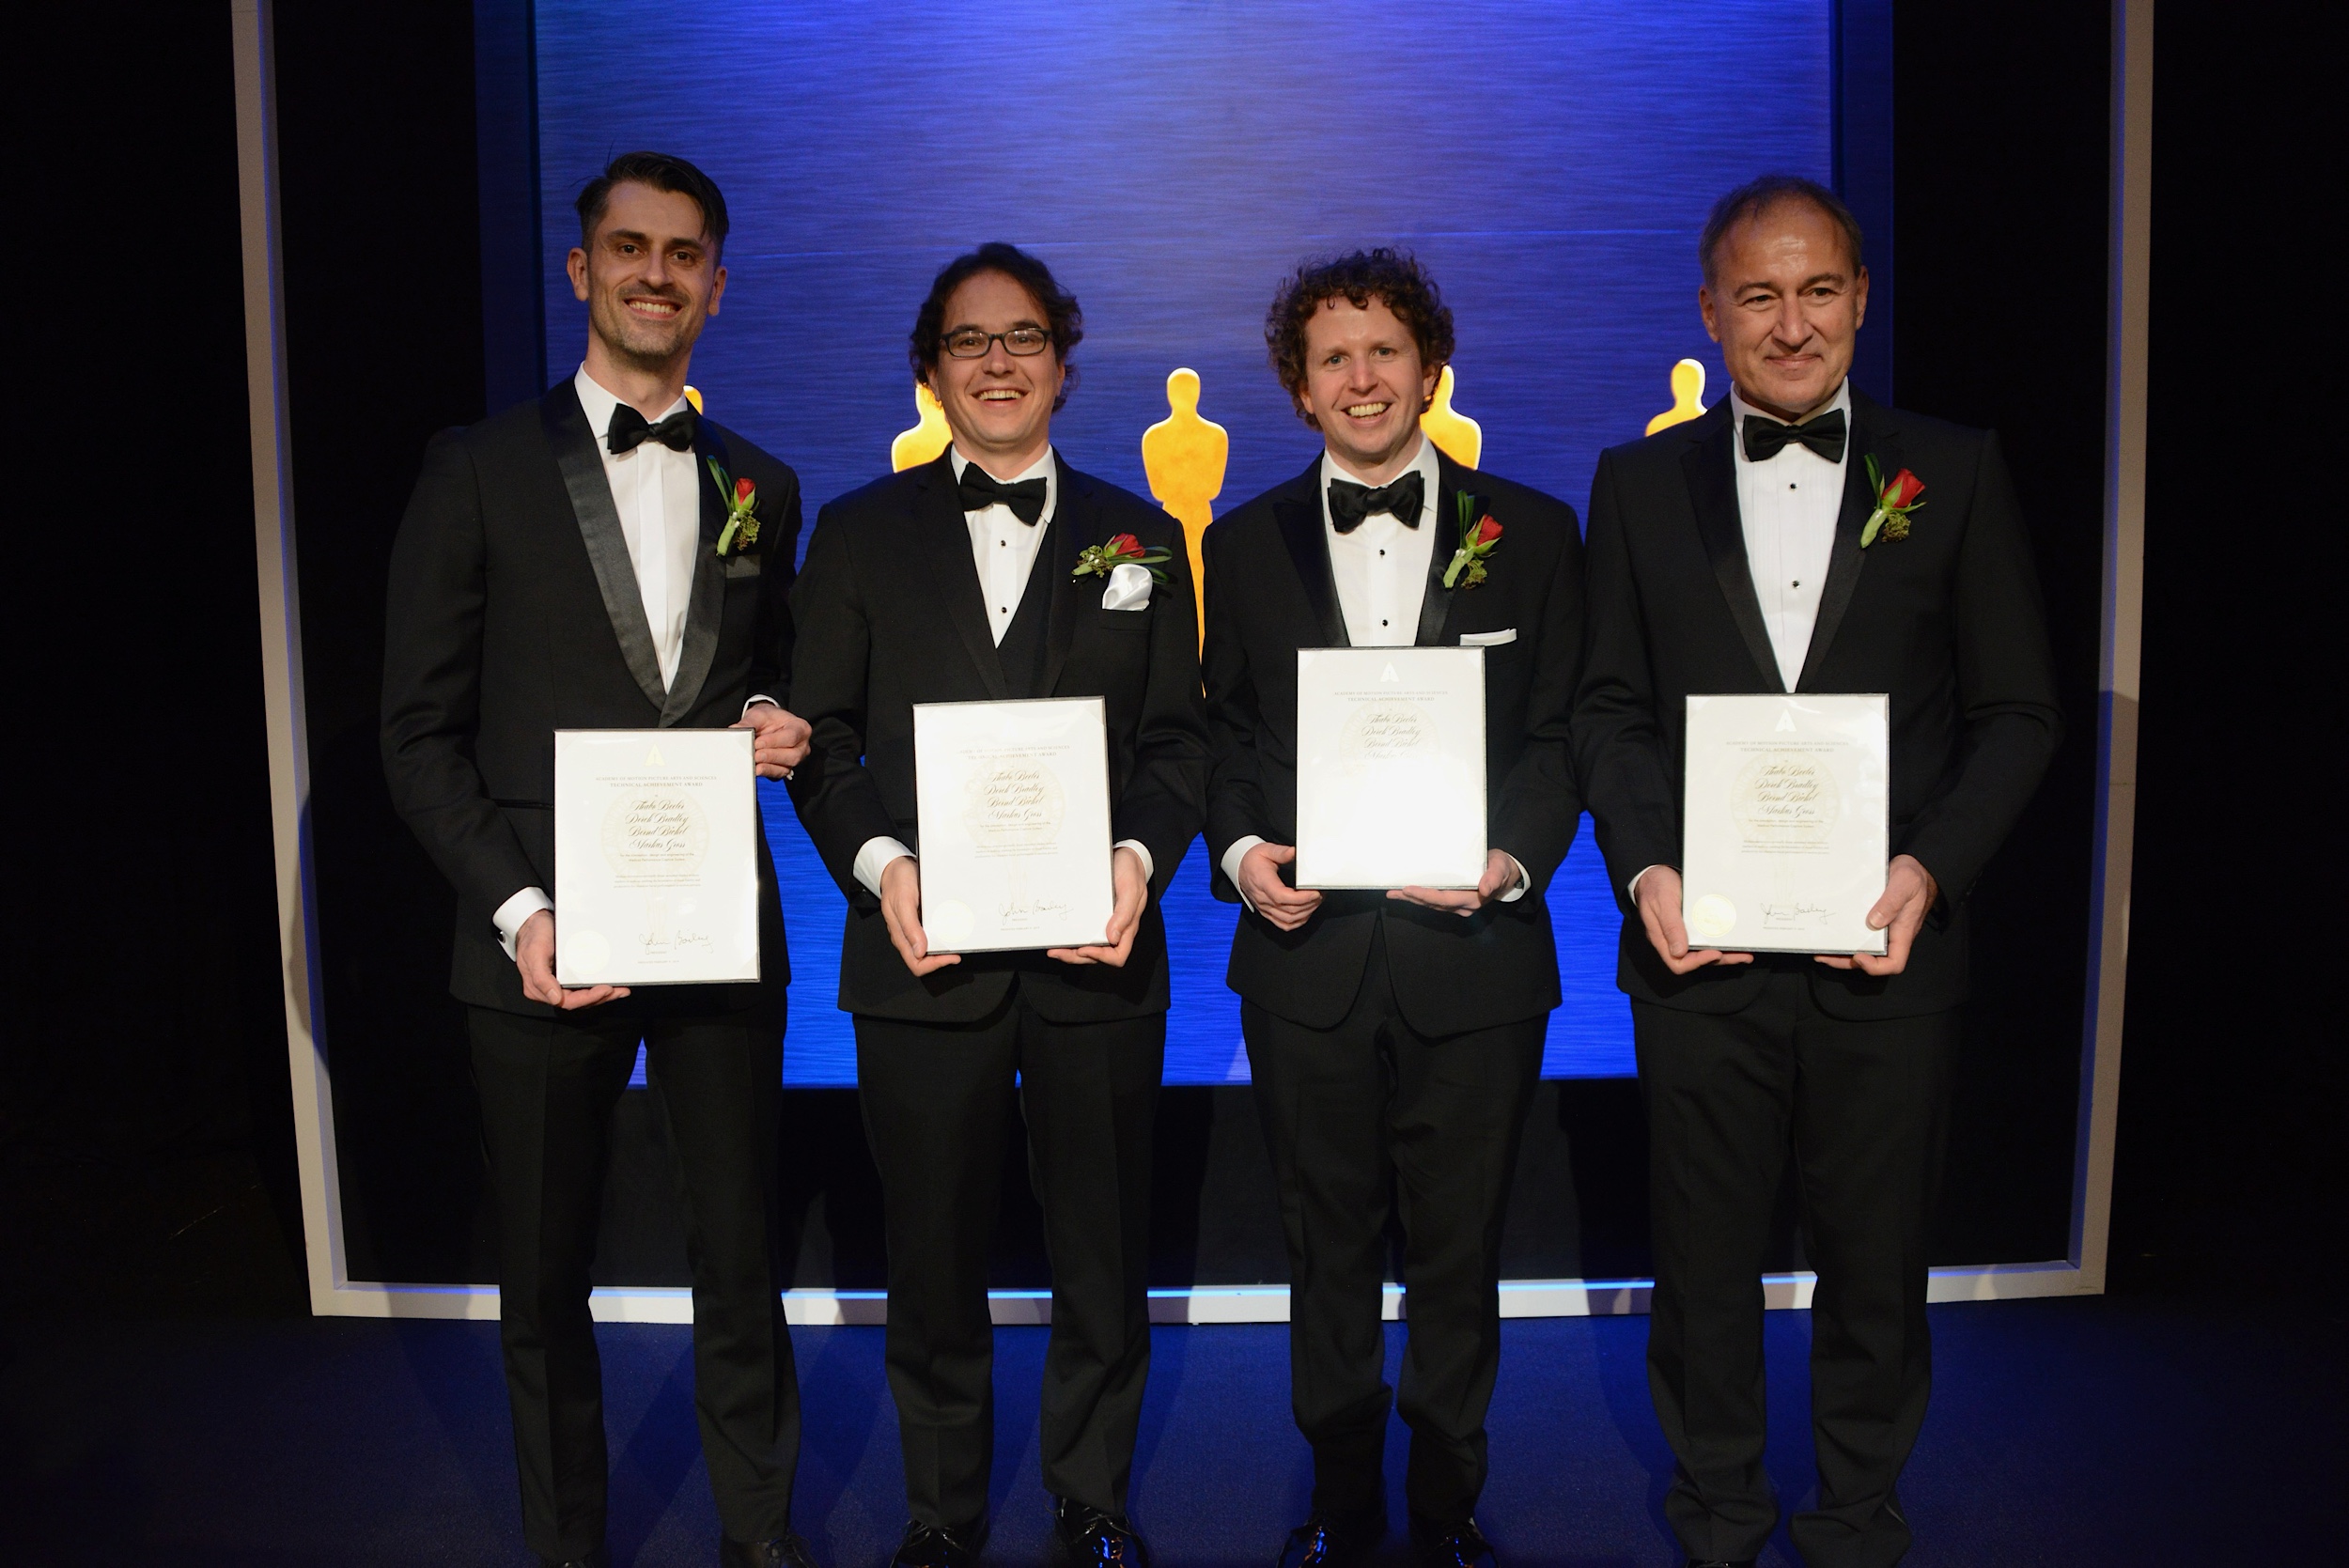 Bernd Bickel, far left, at the Oscar awards ceremony.